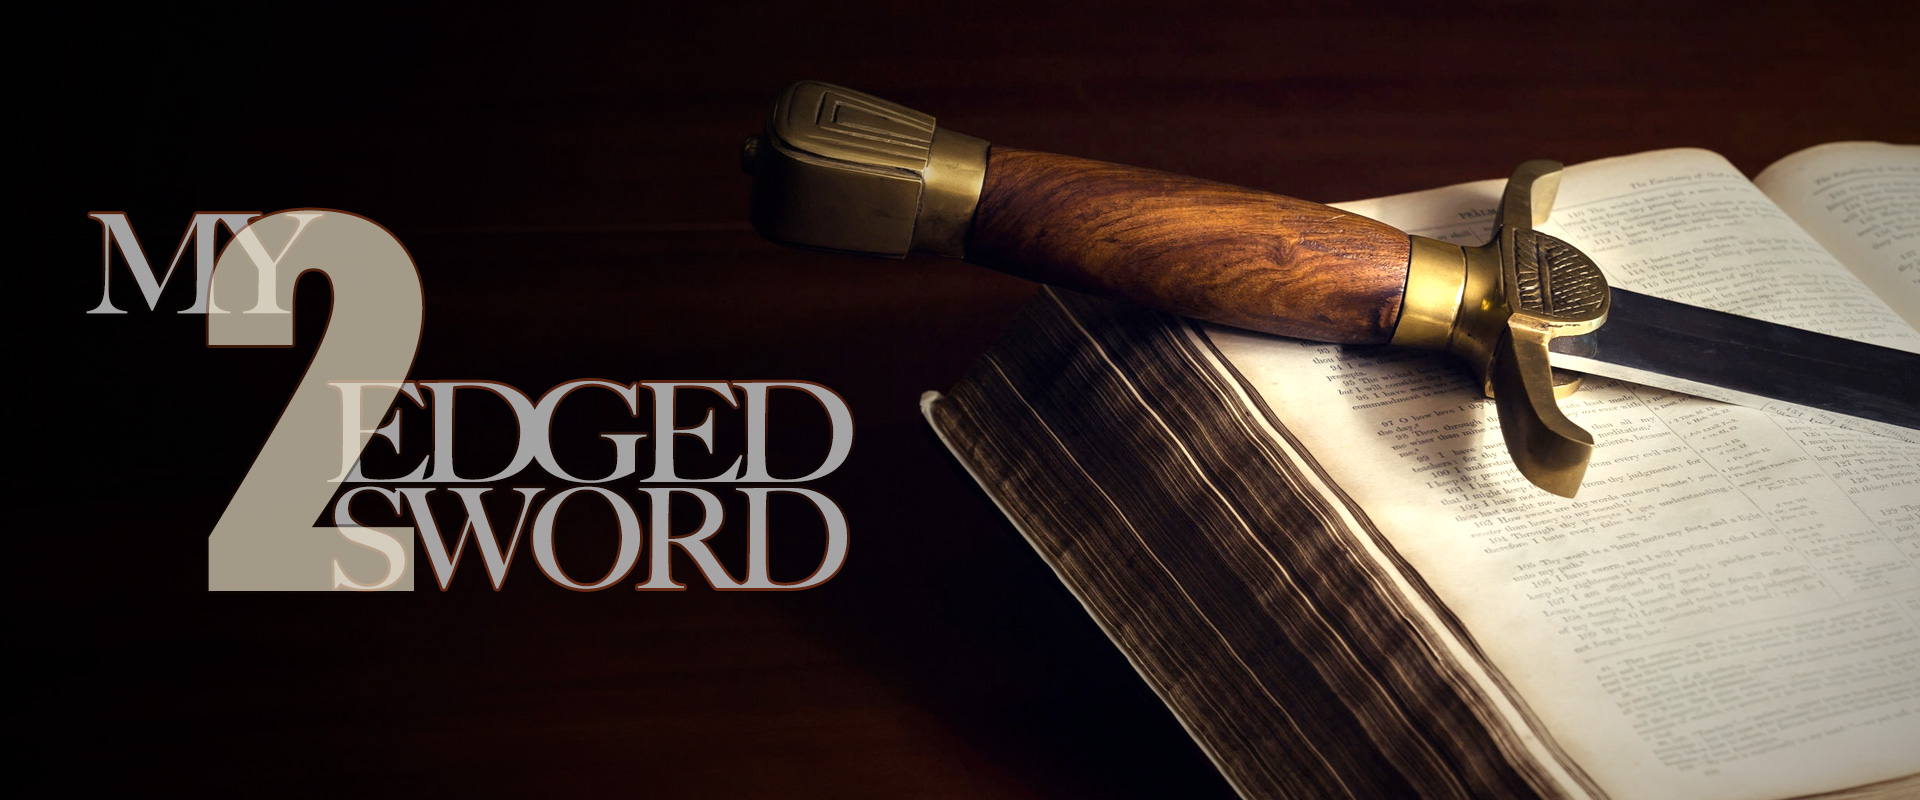 word spirit sword edged jezebel against praying royal branham